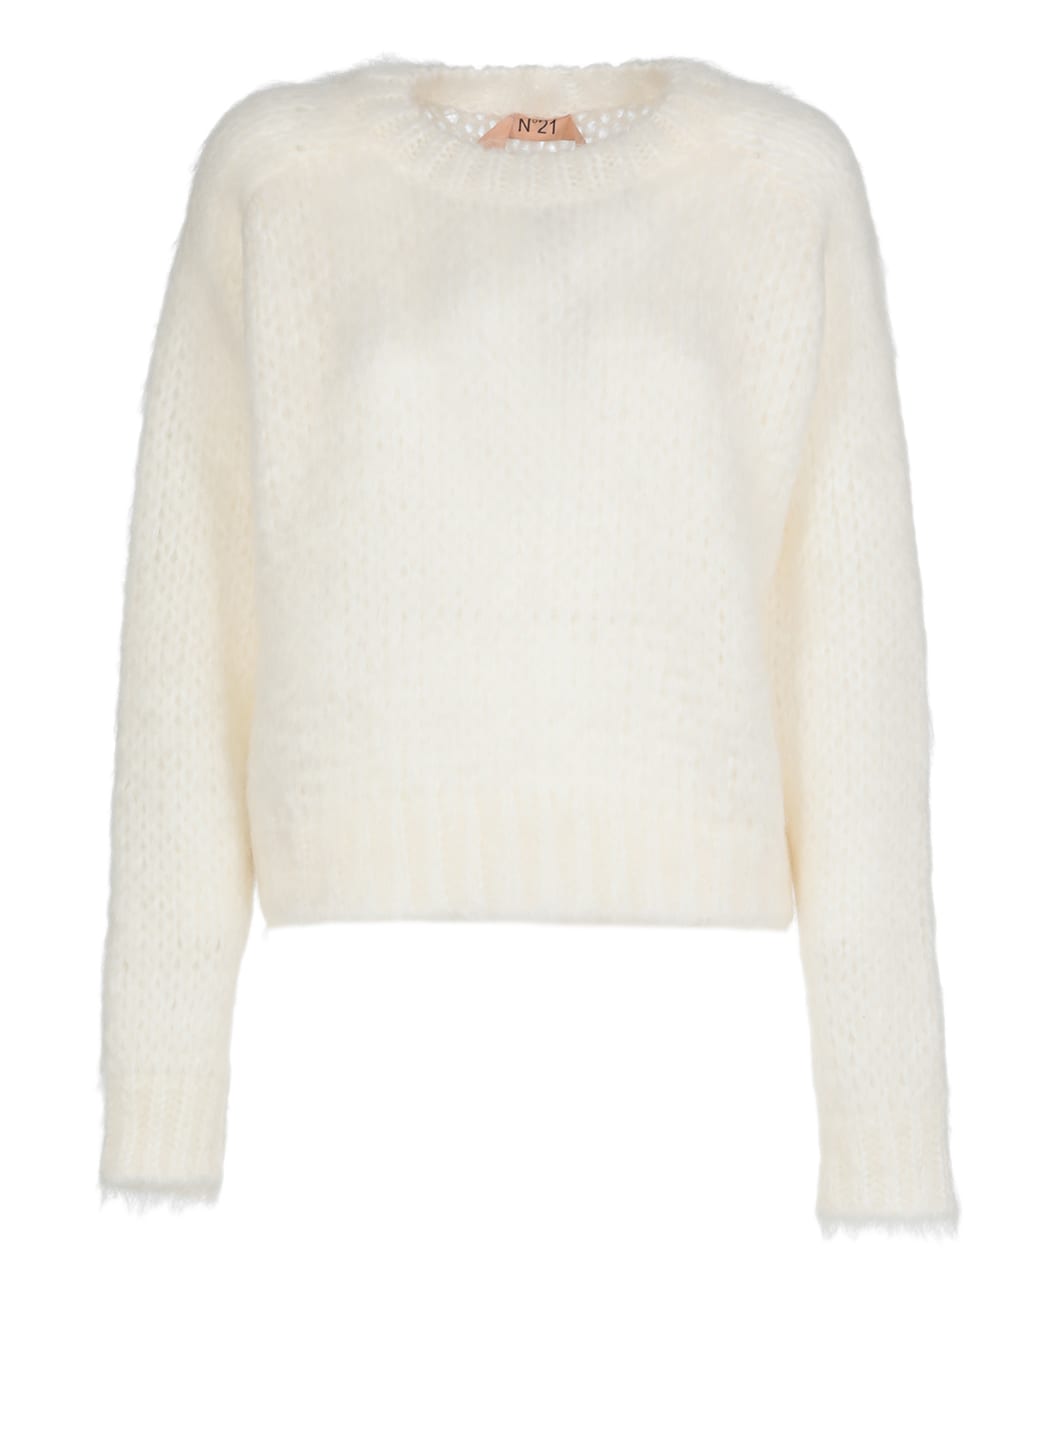 N.21 Wool Blend Sweater